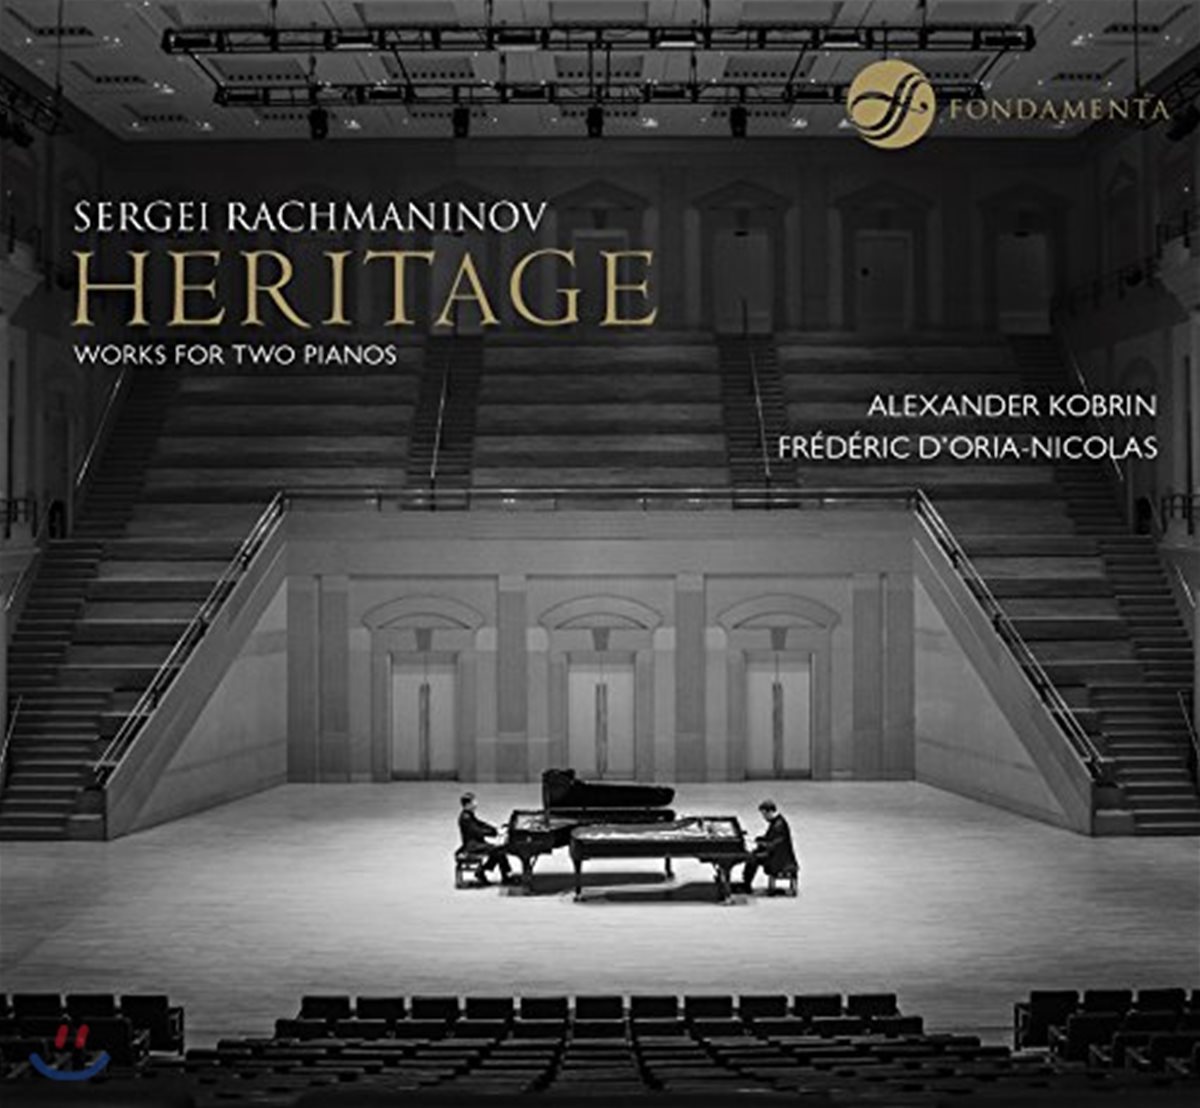 Frederic D'Oria-Nicolas / Alexander Kobrin 라흐마니노프: 두 대의 피아노를 위한 작품집 (Rachmaninov: Heritage - Works for two pianos)